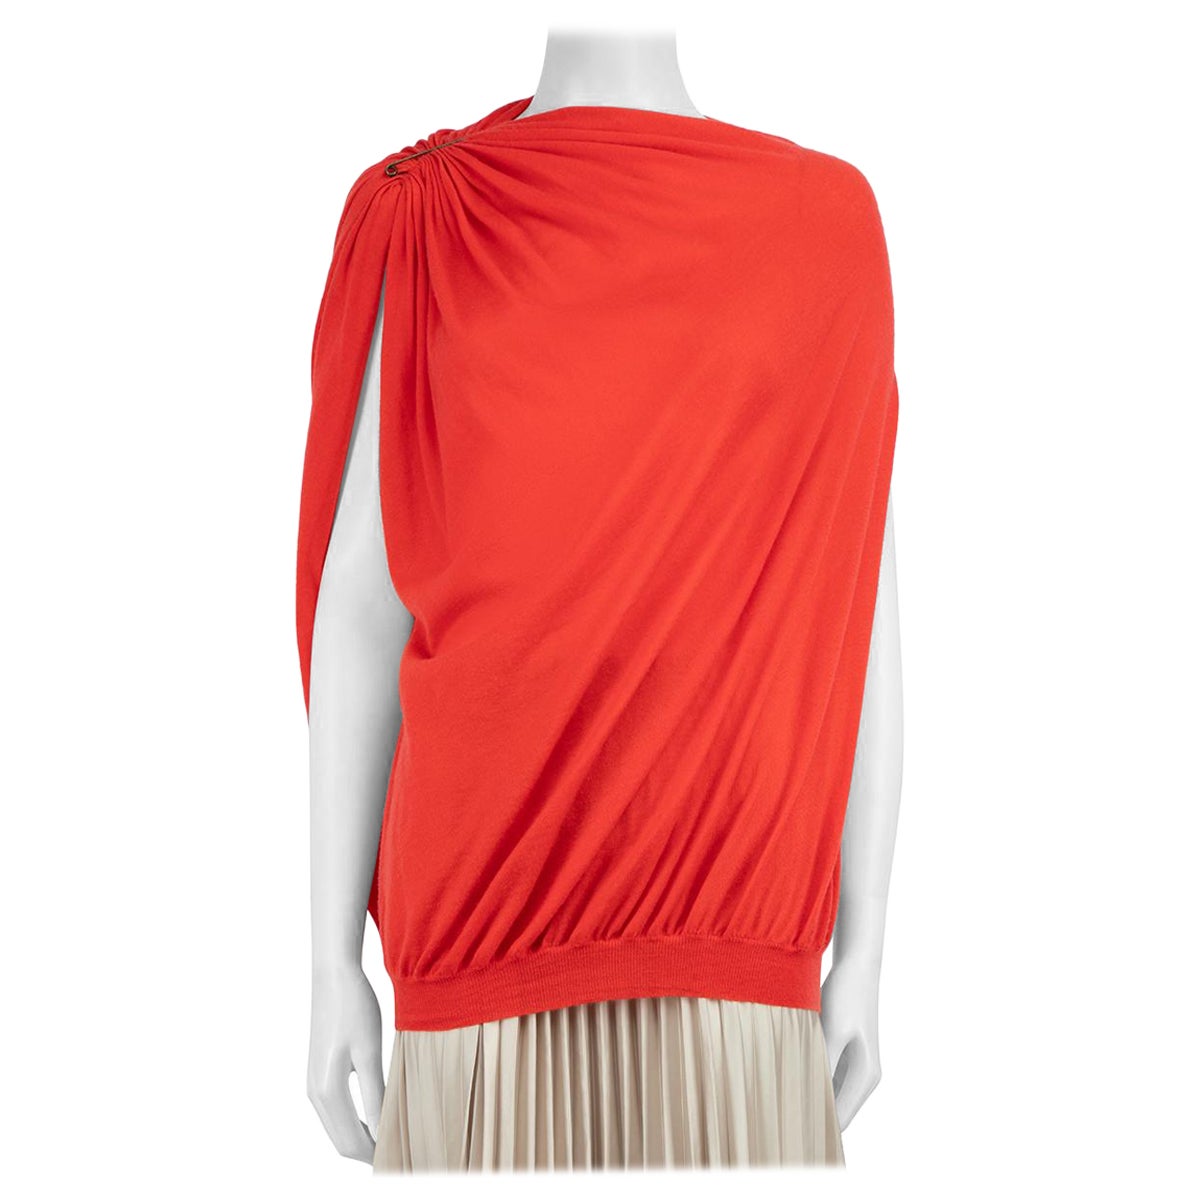 Lanvin Red Cashmere Fine Knit Draped Shoulder Top Size S For Sale